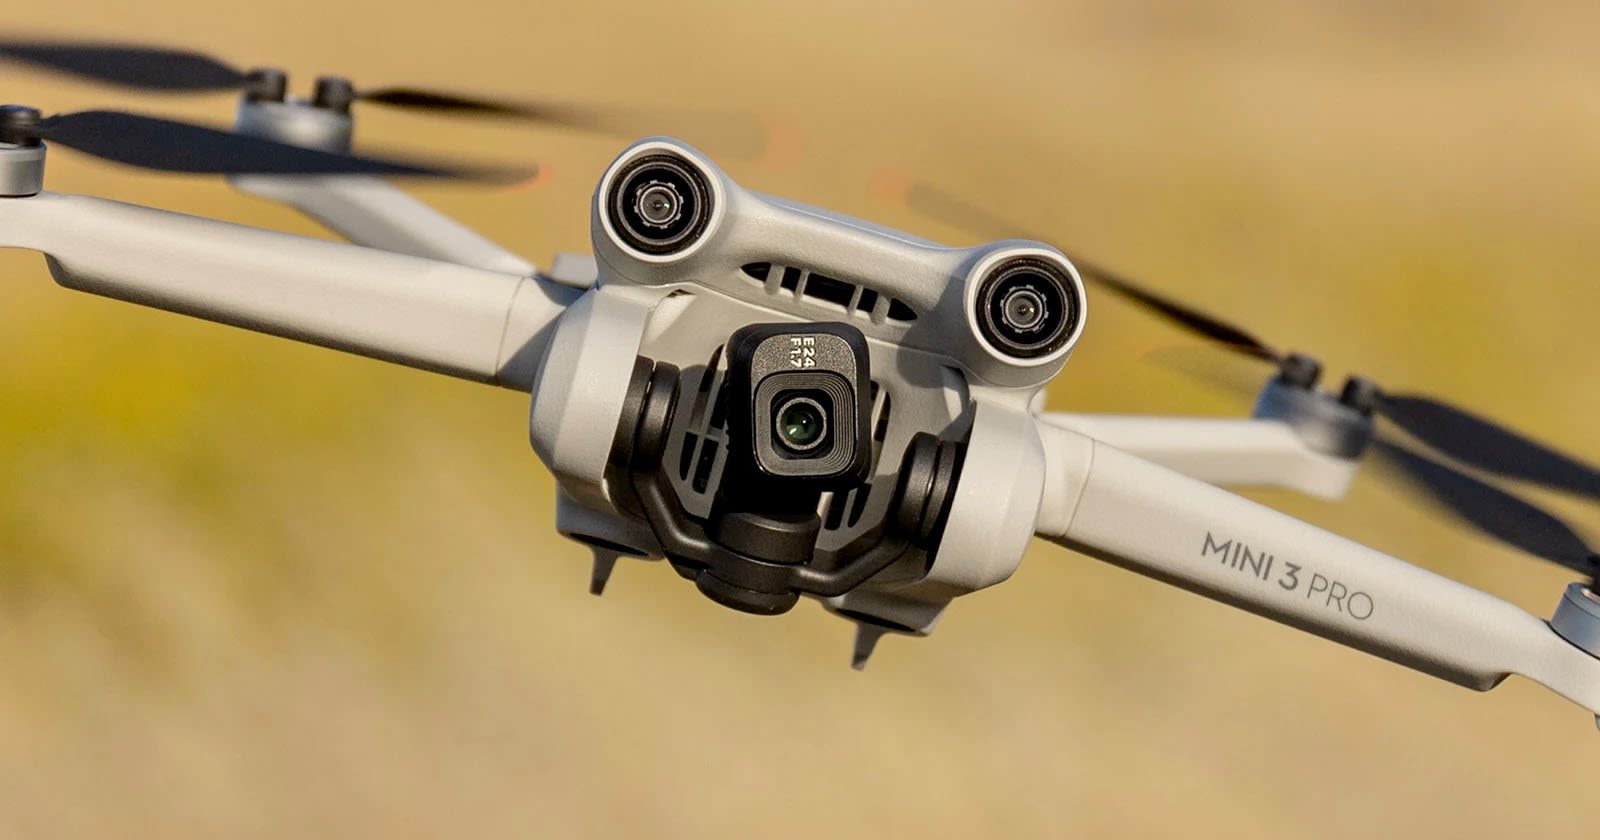 U.S. House of Representatives Narrowly Passes DJI Drone Ban Bill